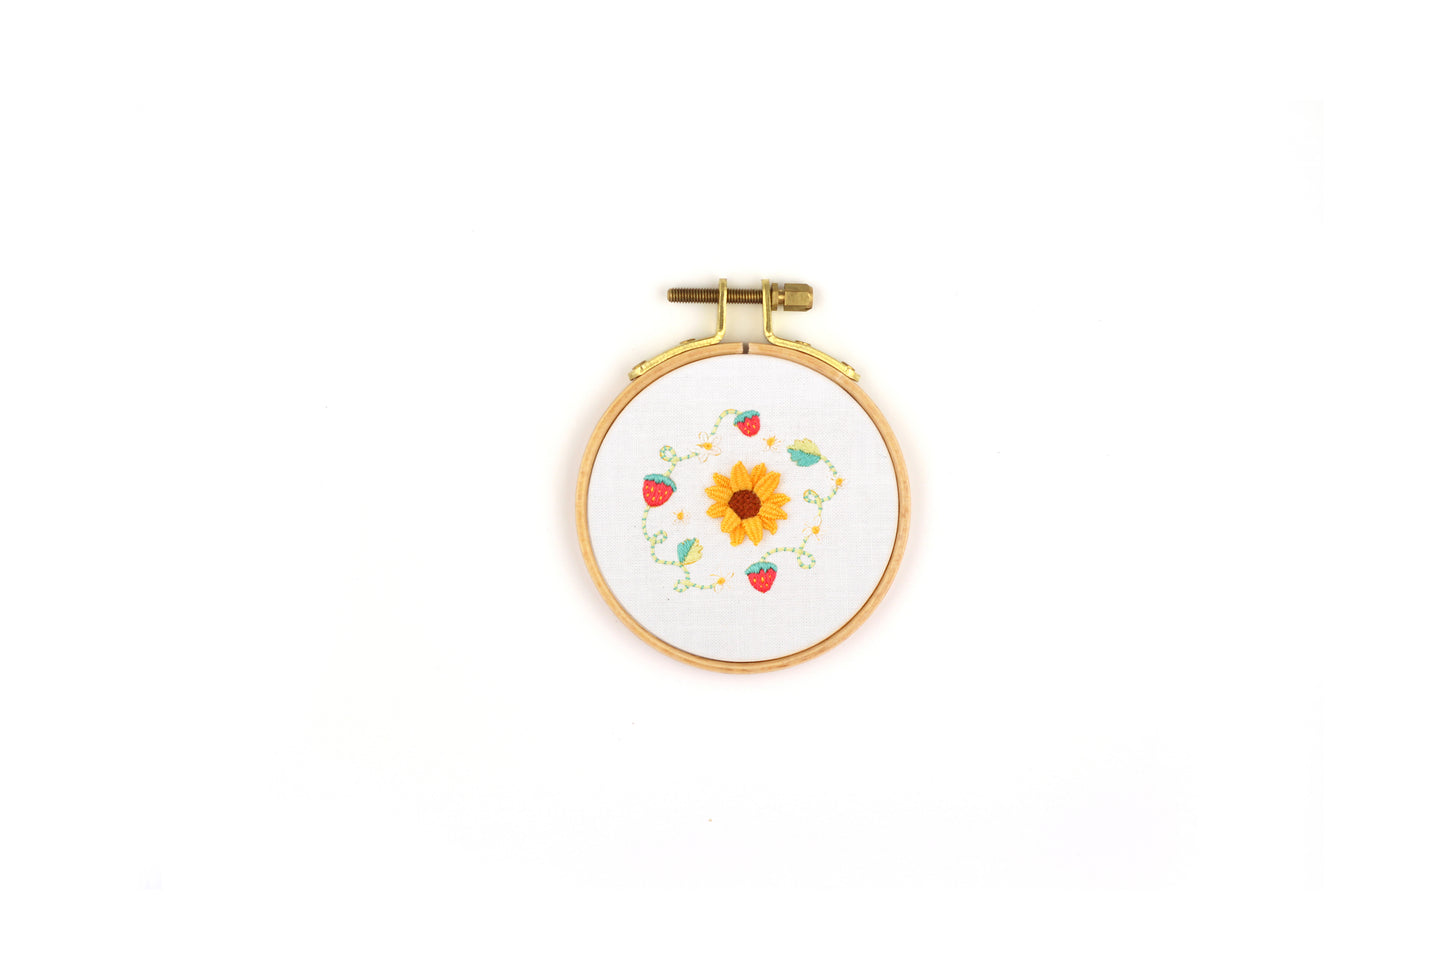 Summer - Embroidery Stitch Sampler